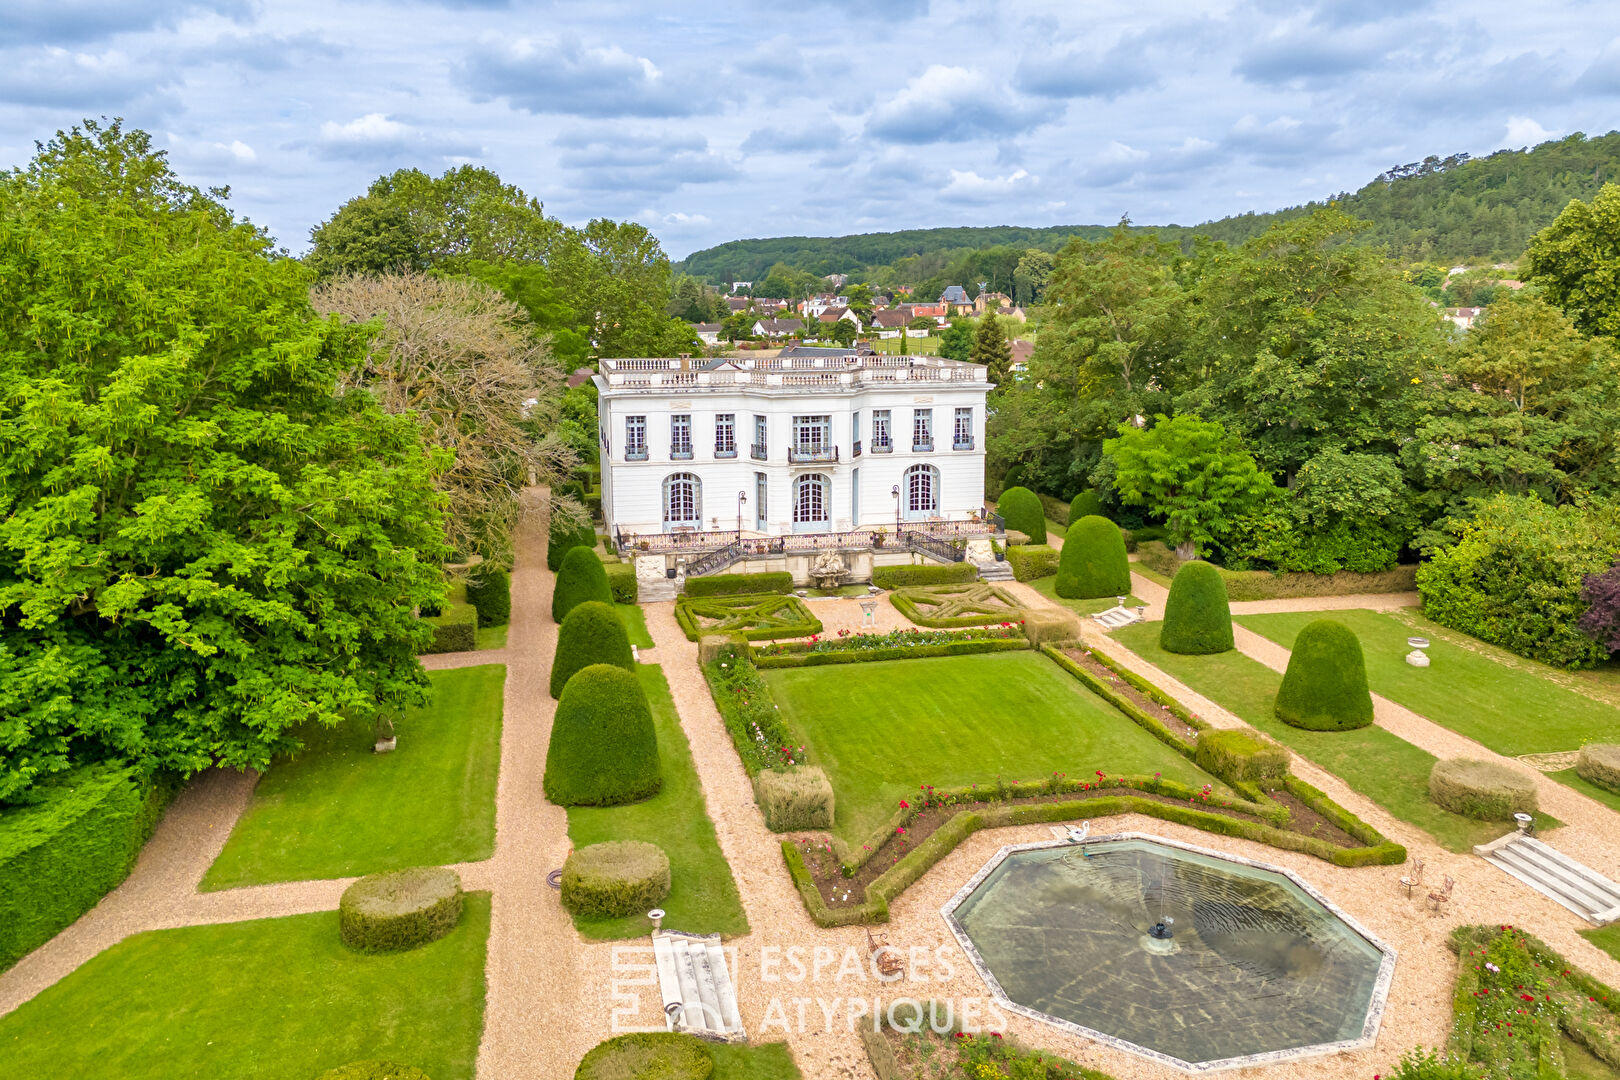 Château “Folie XVIIIth” on the banks of the Eure